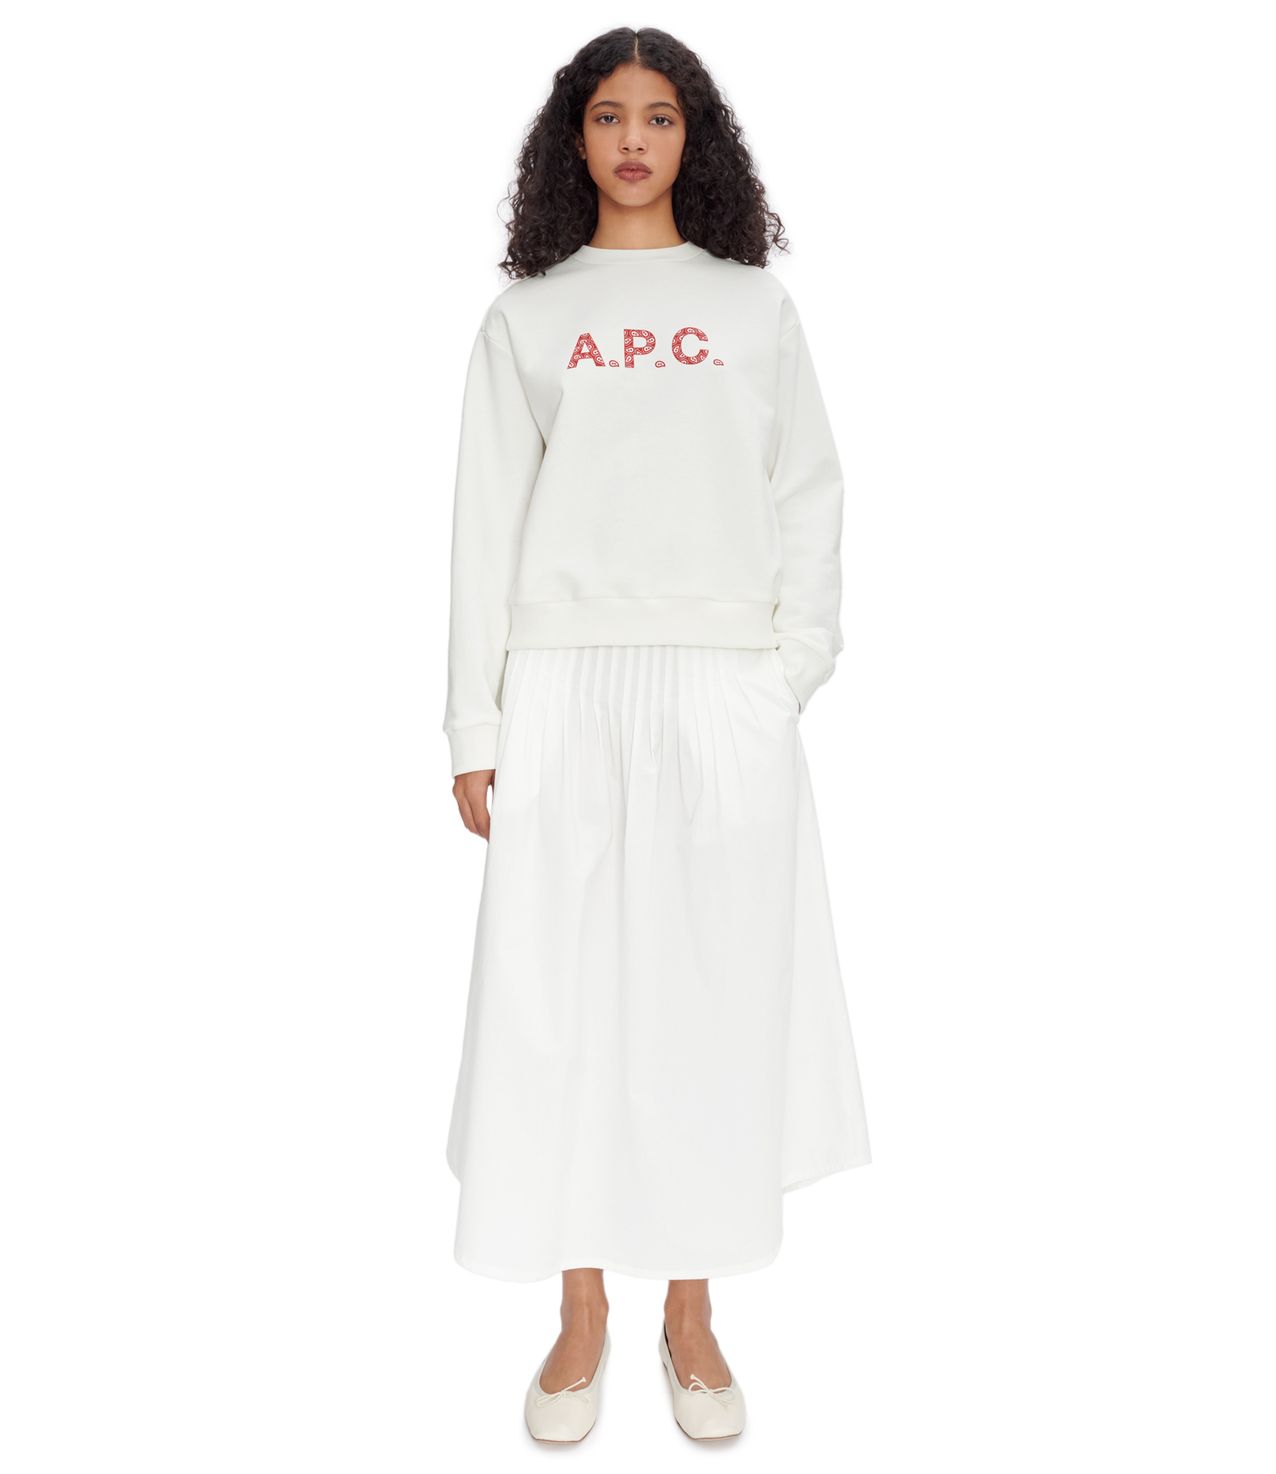 Patty sweatshirt WHITE/RED APC